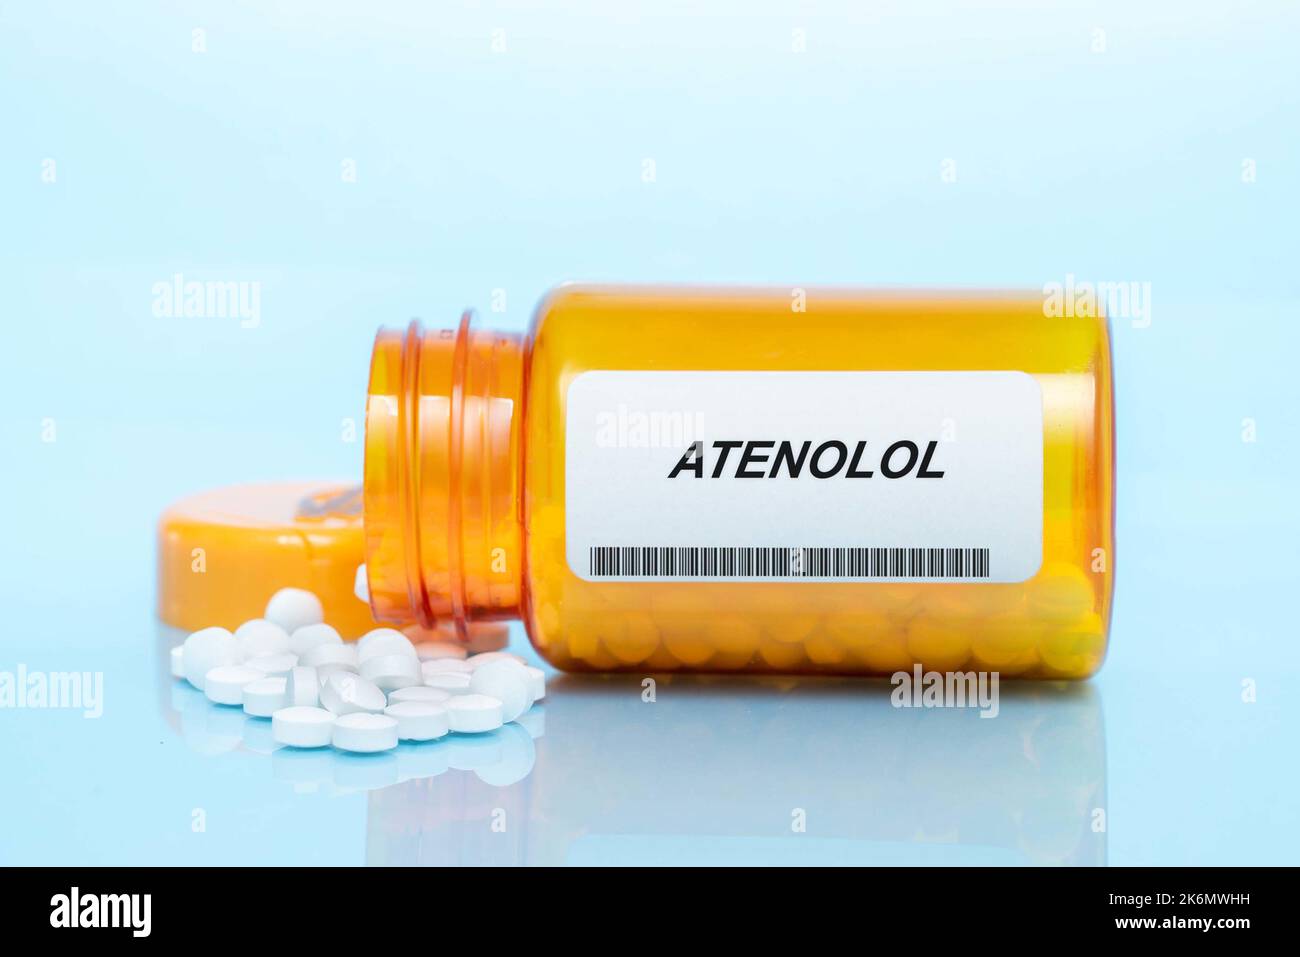 Atenolol pill bottle, conceptual image Stock Photo